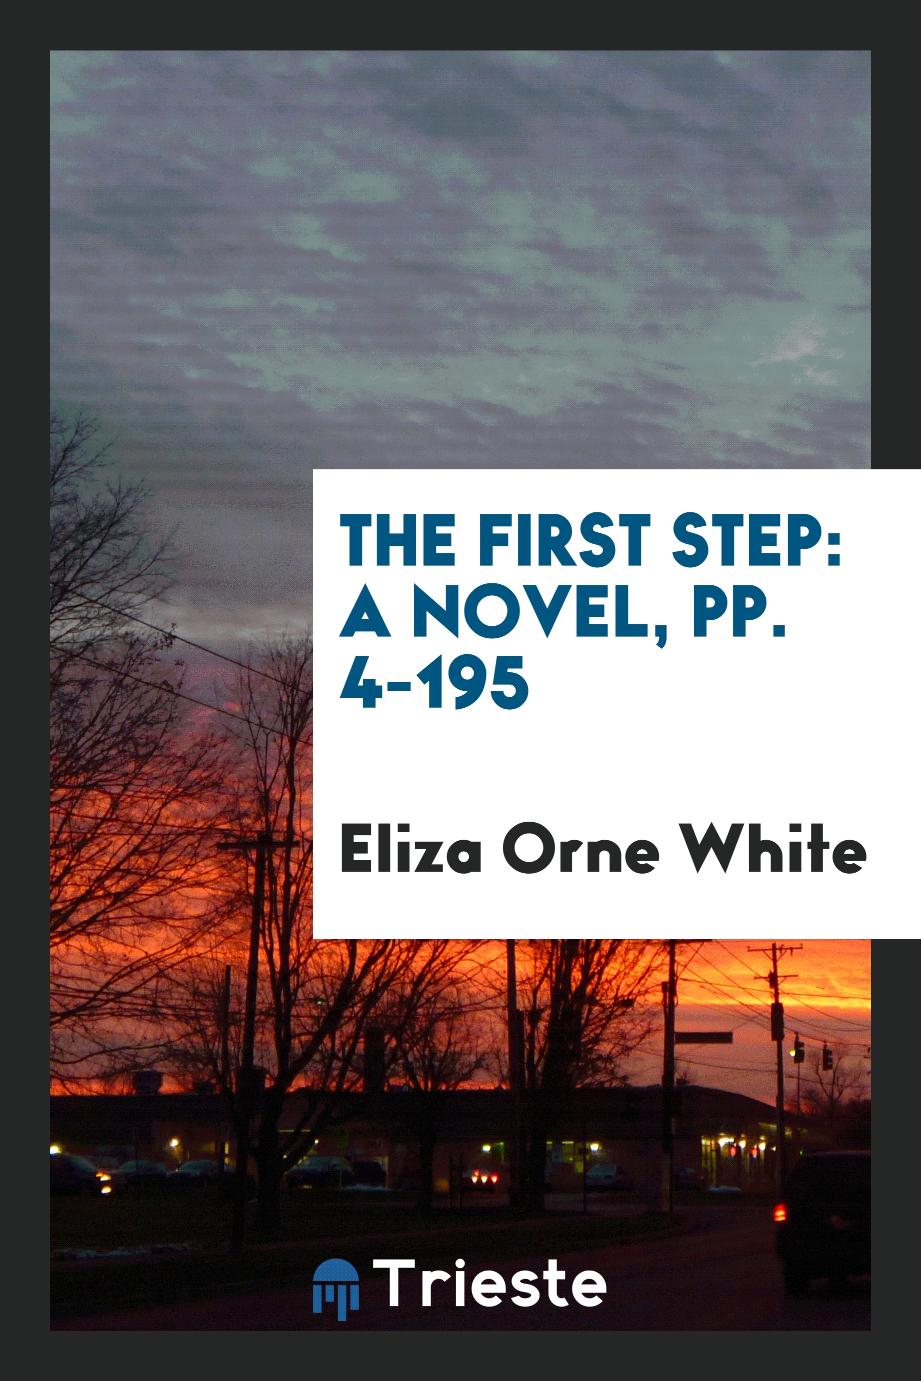 The First Step: A Novel, pp. 4-195